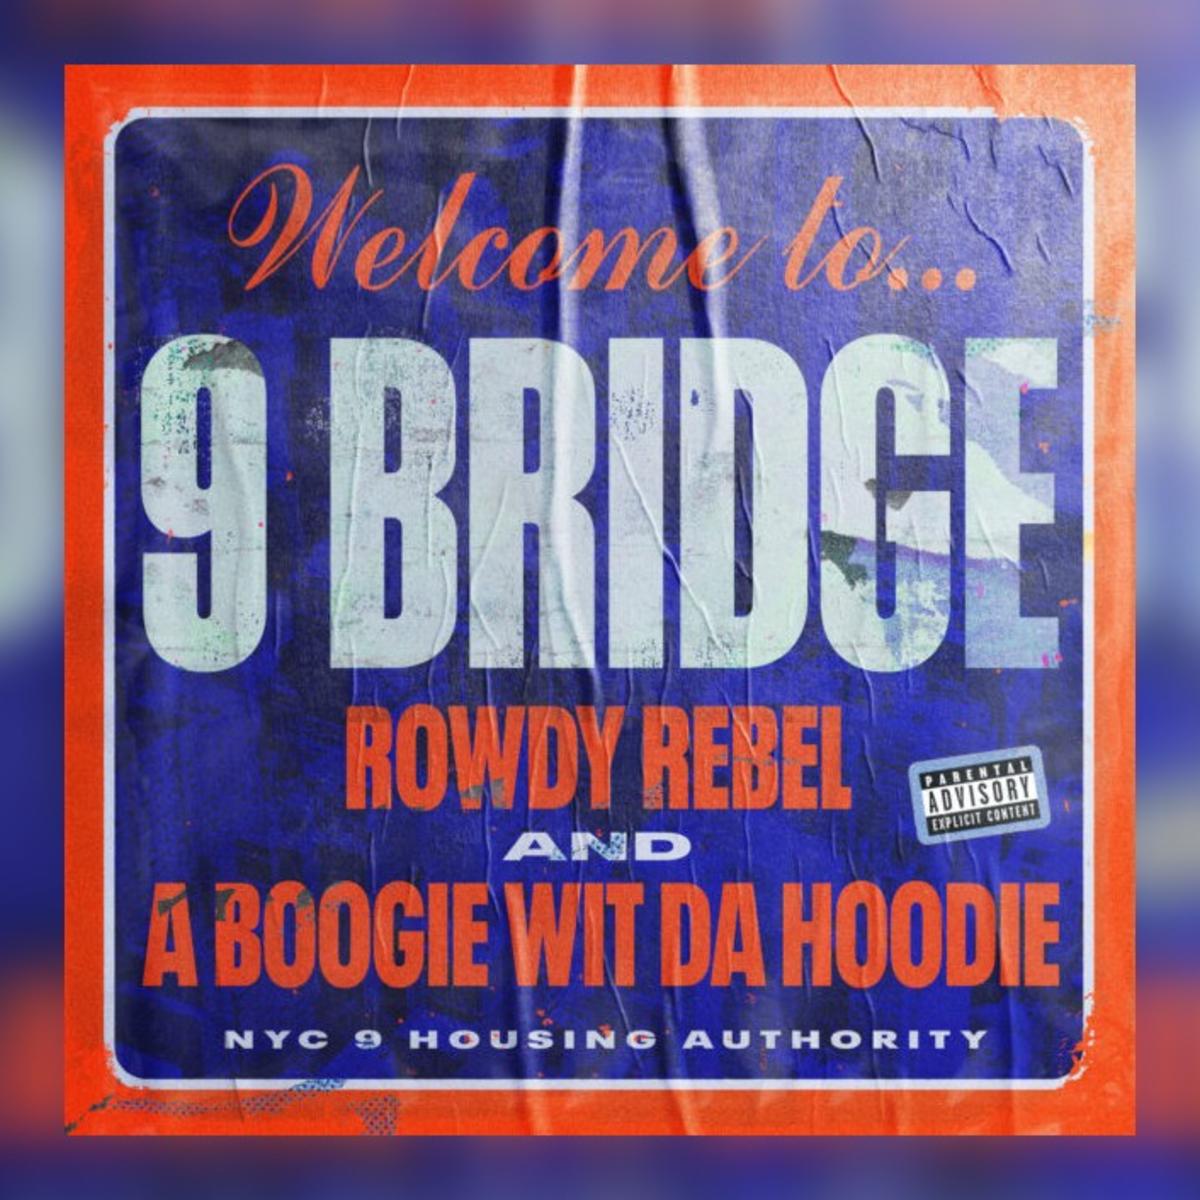 A Boogie Wit Da Hoodie & Rowdy Rebel Link Up For “9 Bridge”